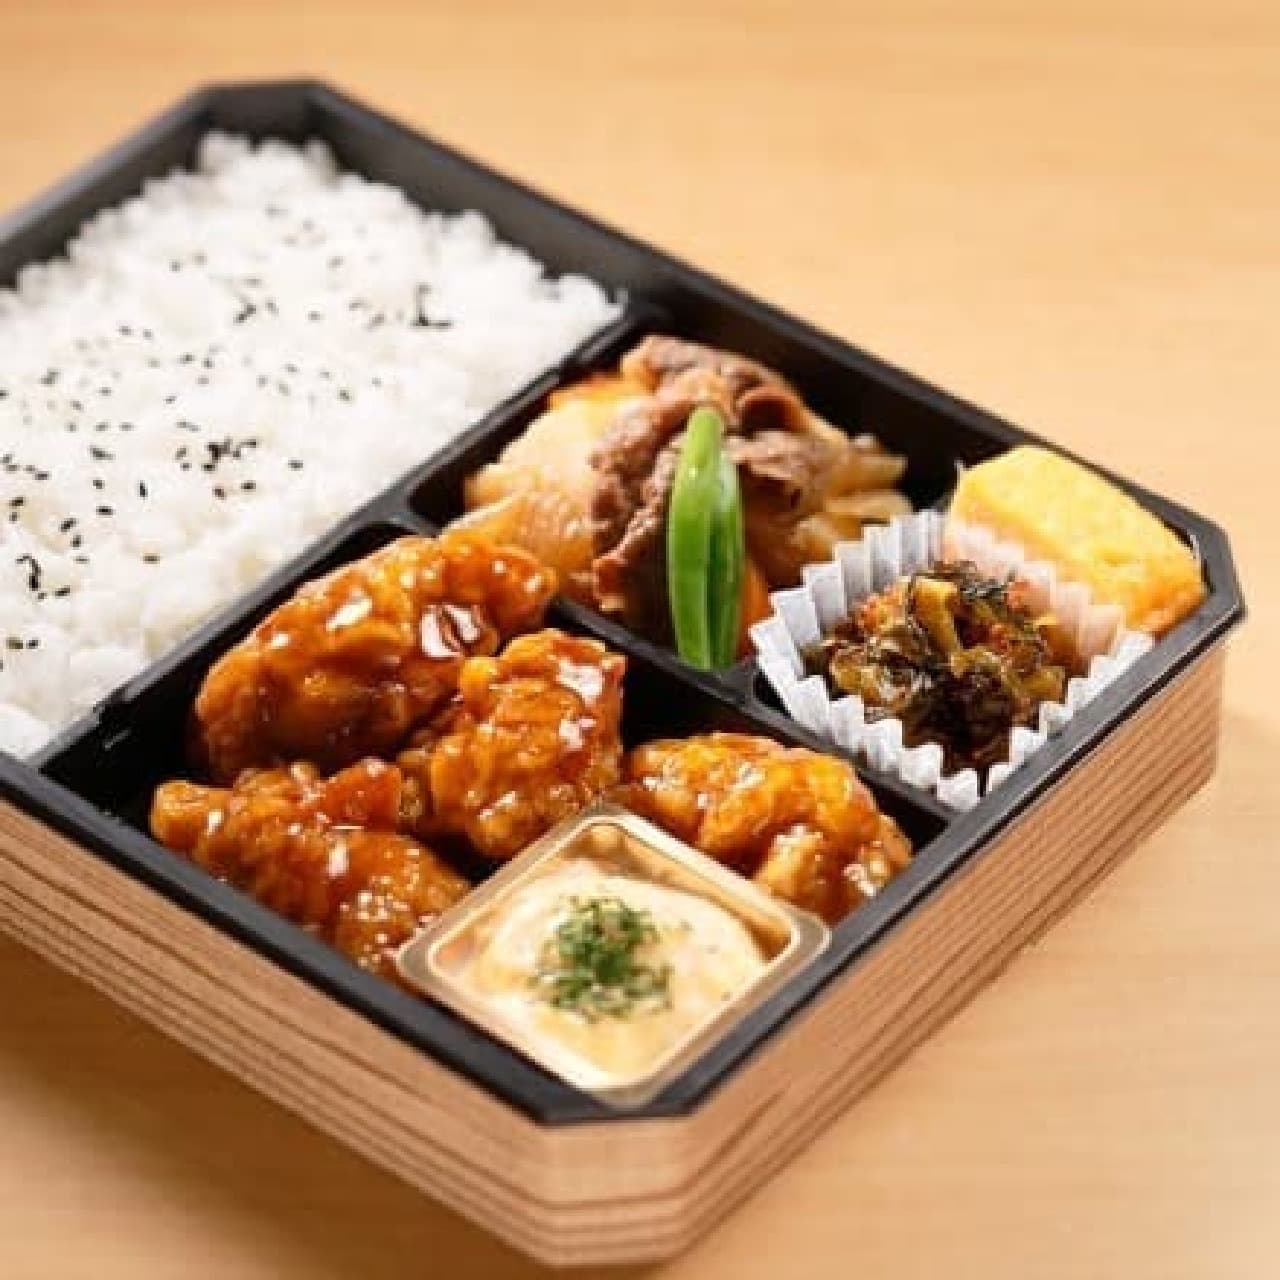 That "chicken nanban" is also a lunch box